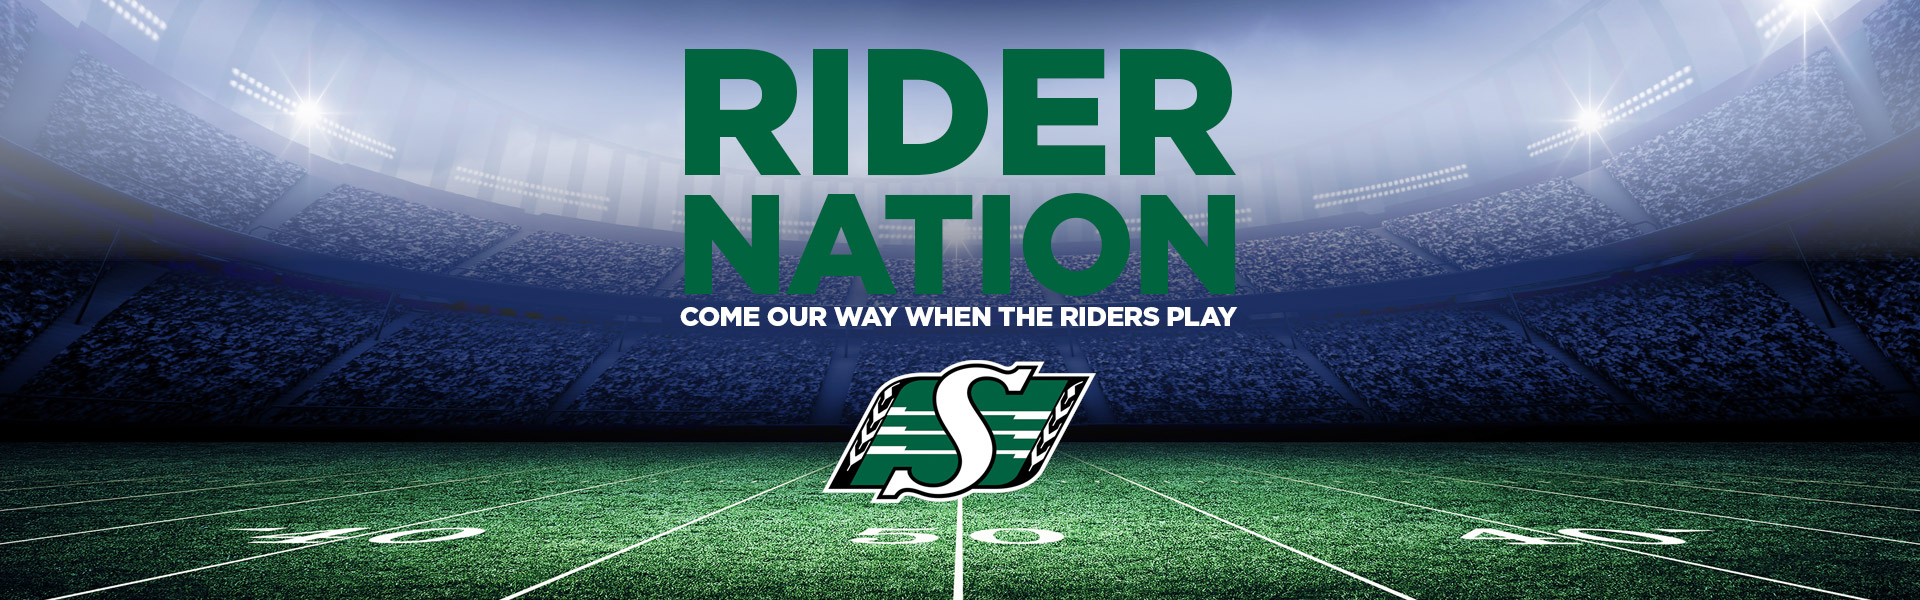 Rider-Nation-Website-Promo-Banner